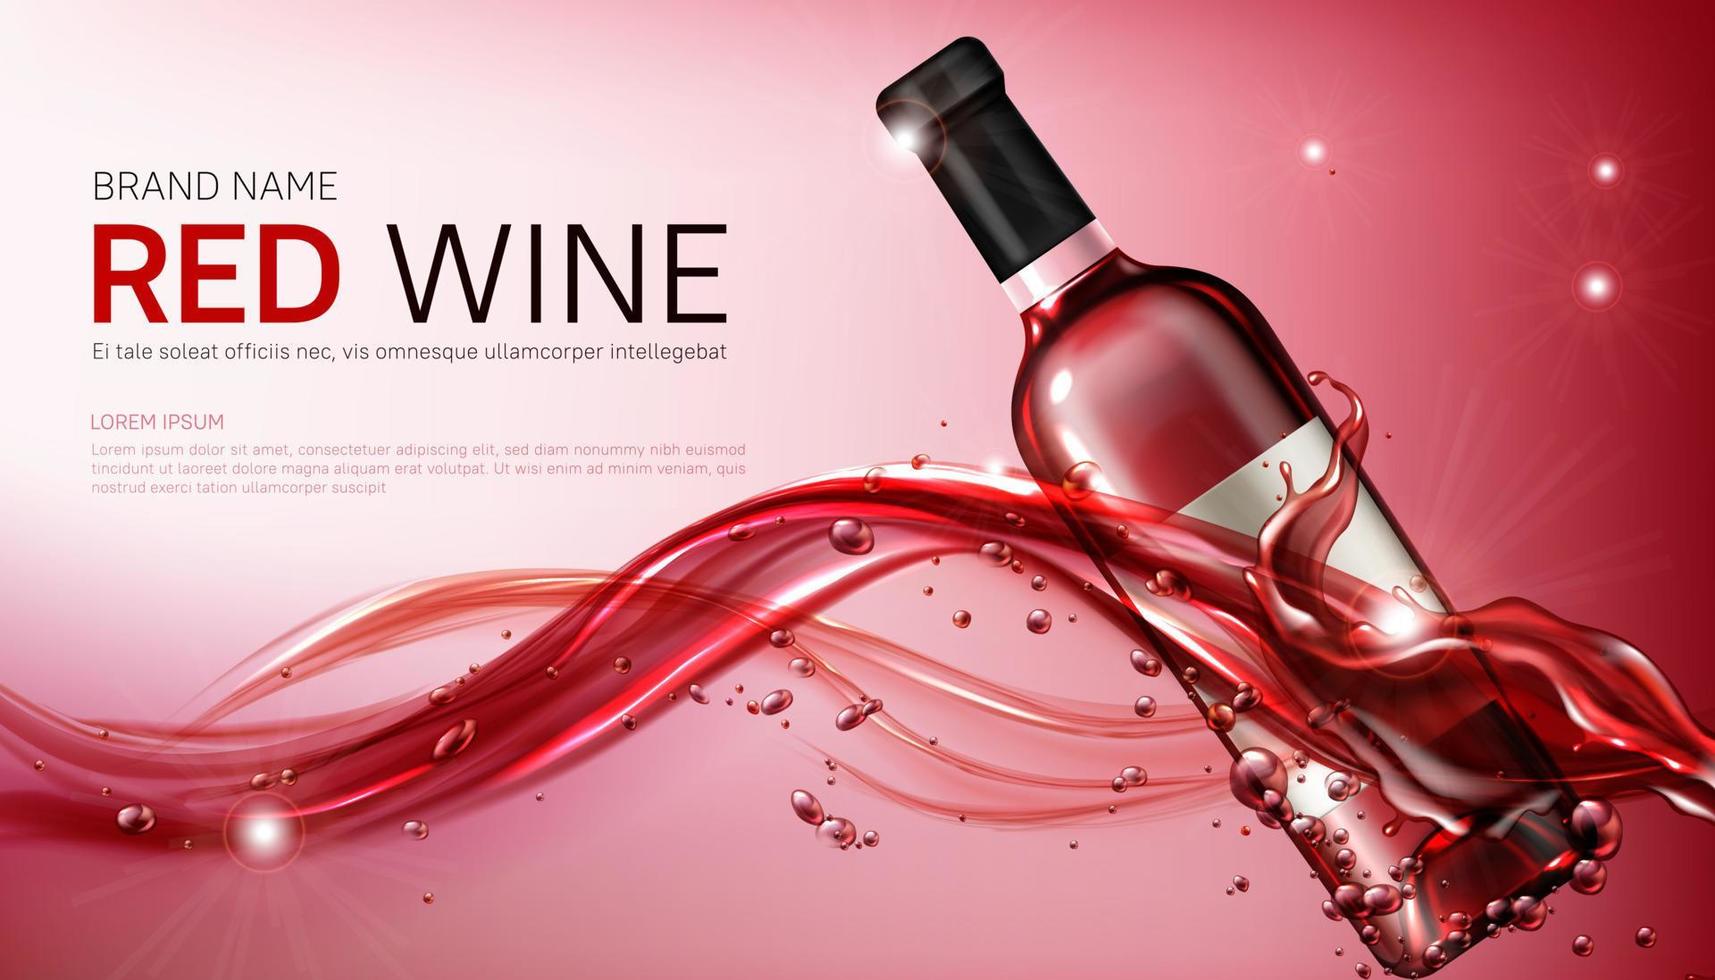 Wine glass bottles in flowing red liquid realistic vector